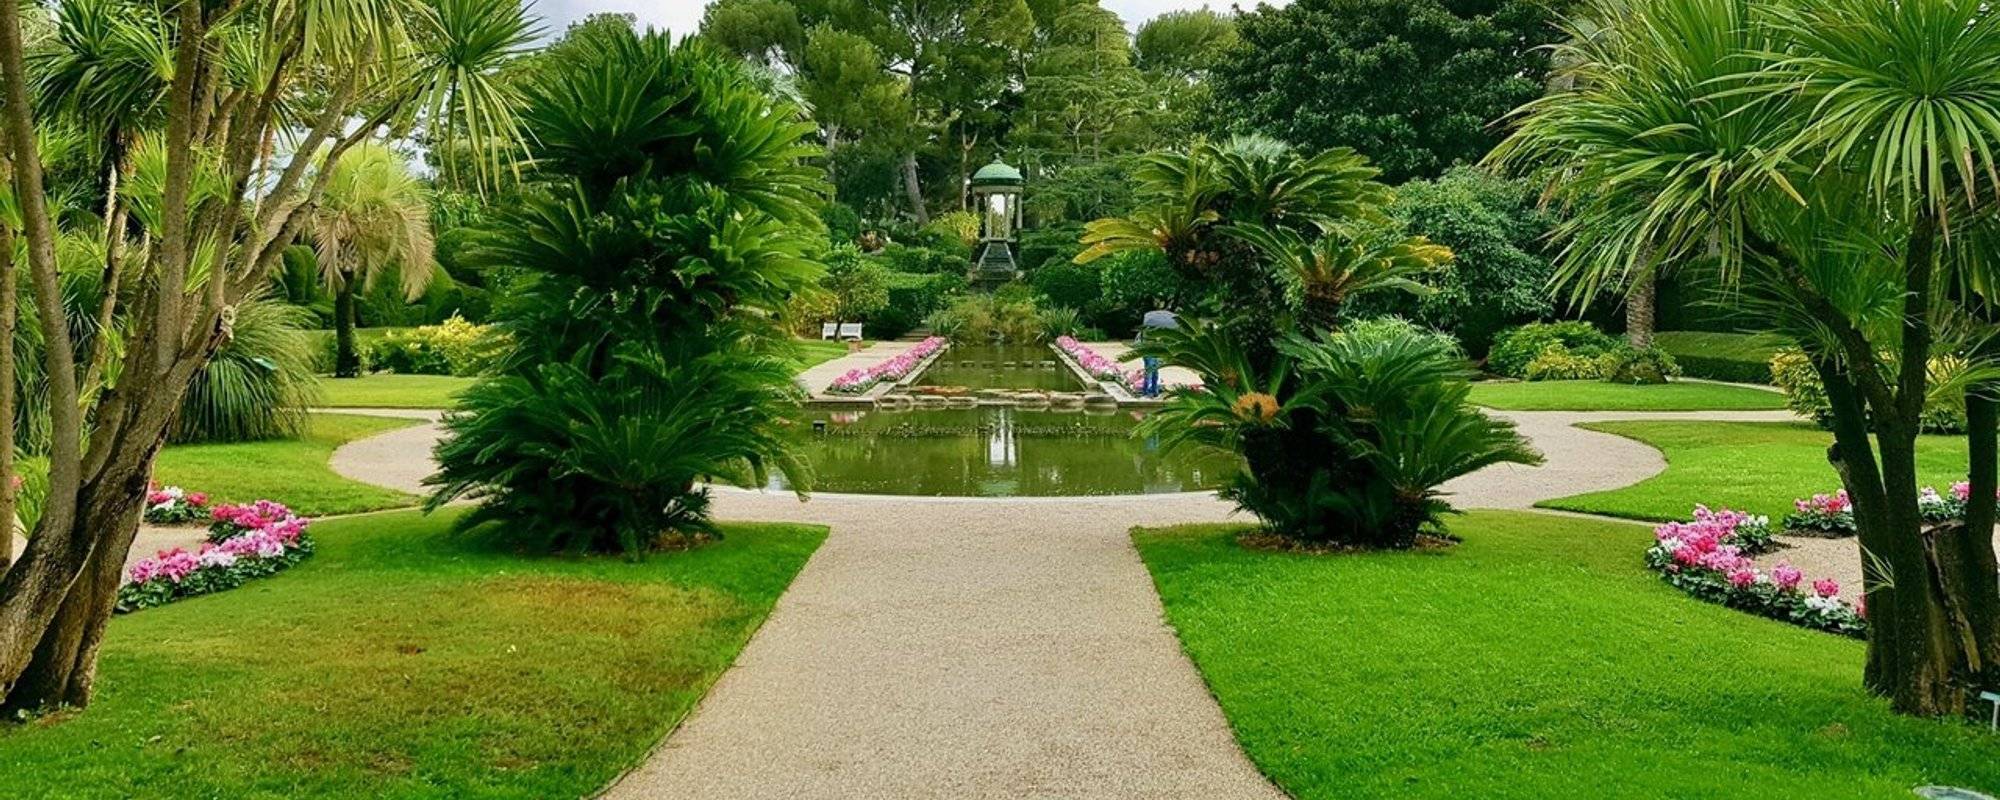 The Gardens of Ephrussi de Rothschild - pt.4 (Provence, France)